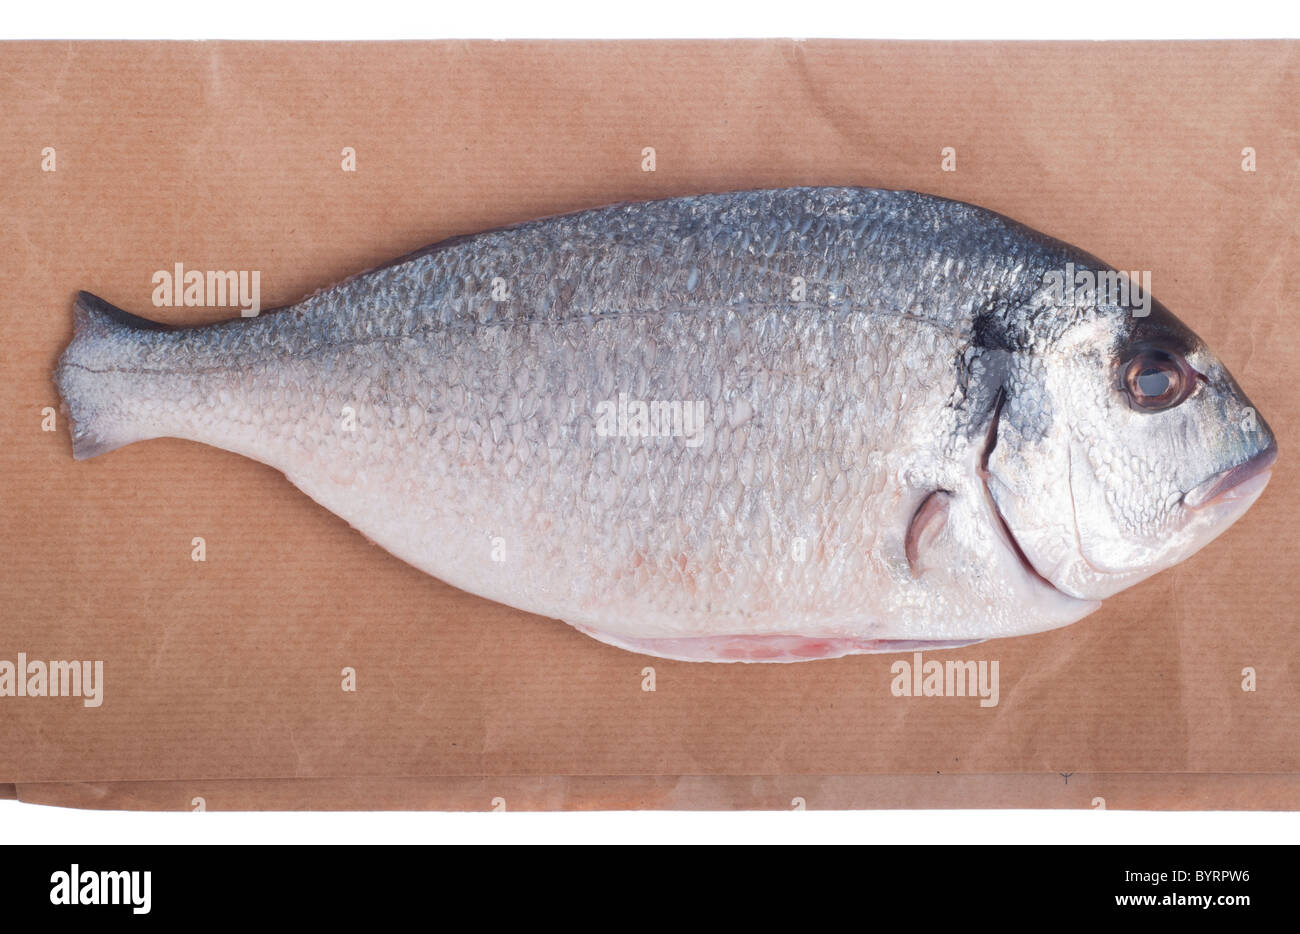 Dorado fish on cutting board.  Food Images ~ Creative Market